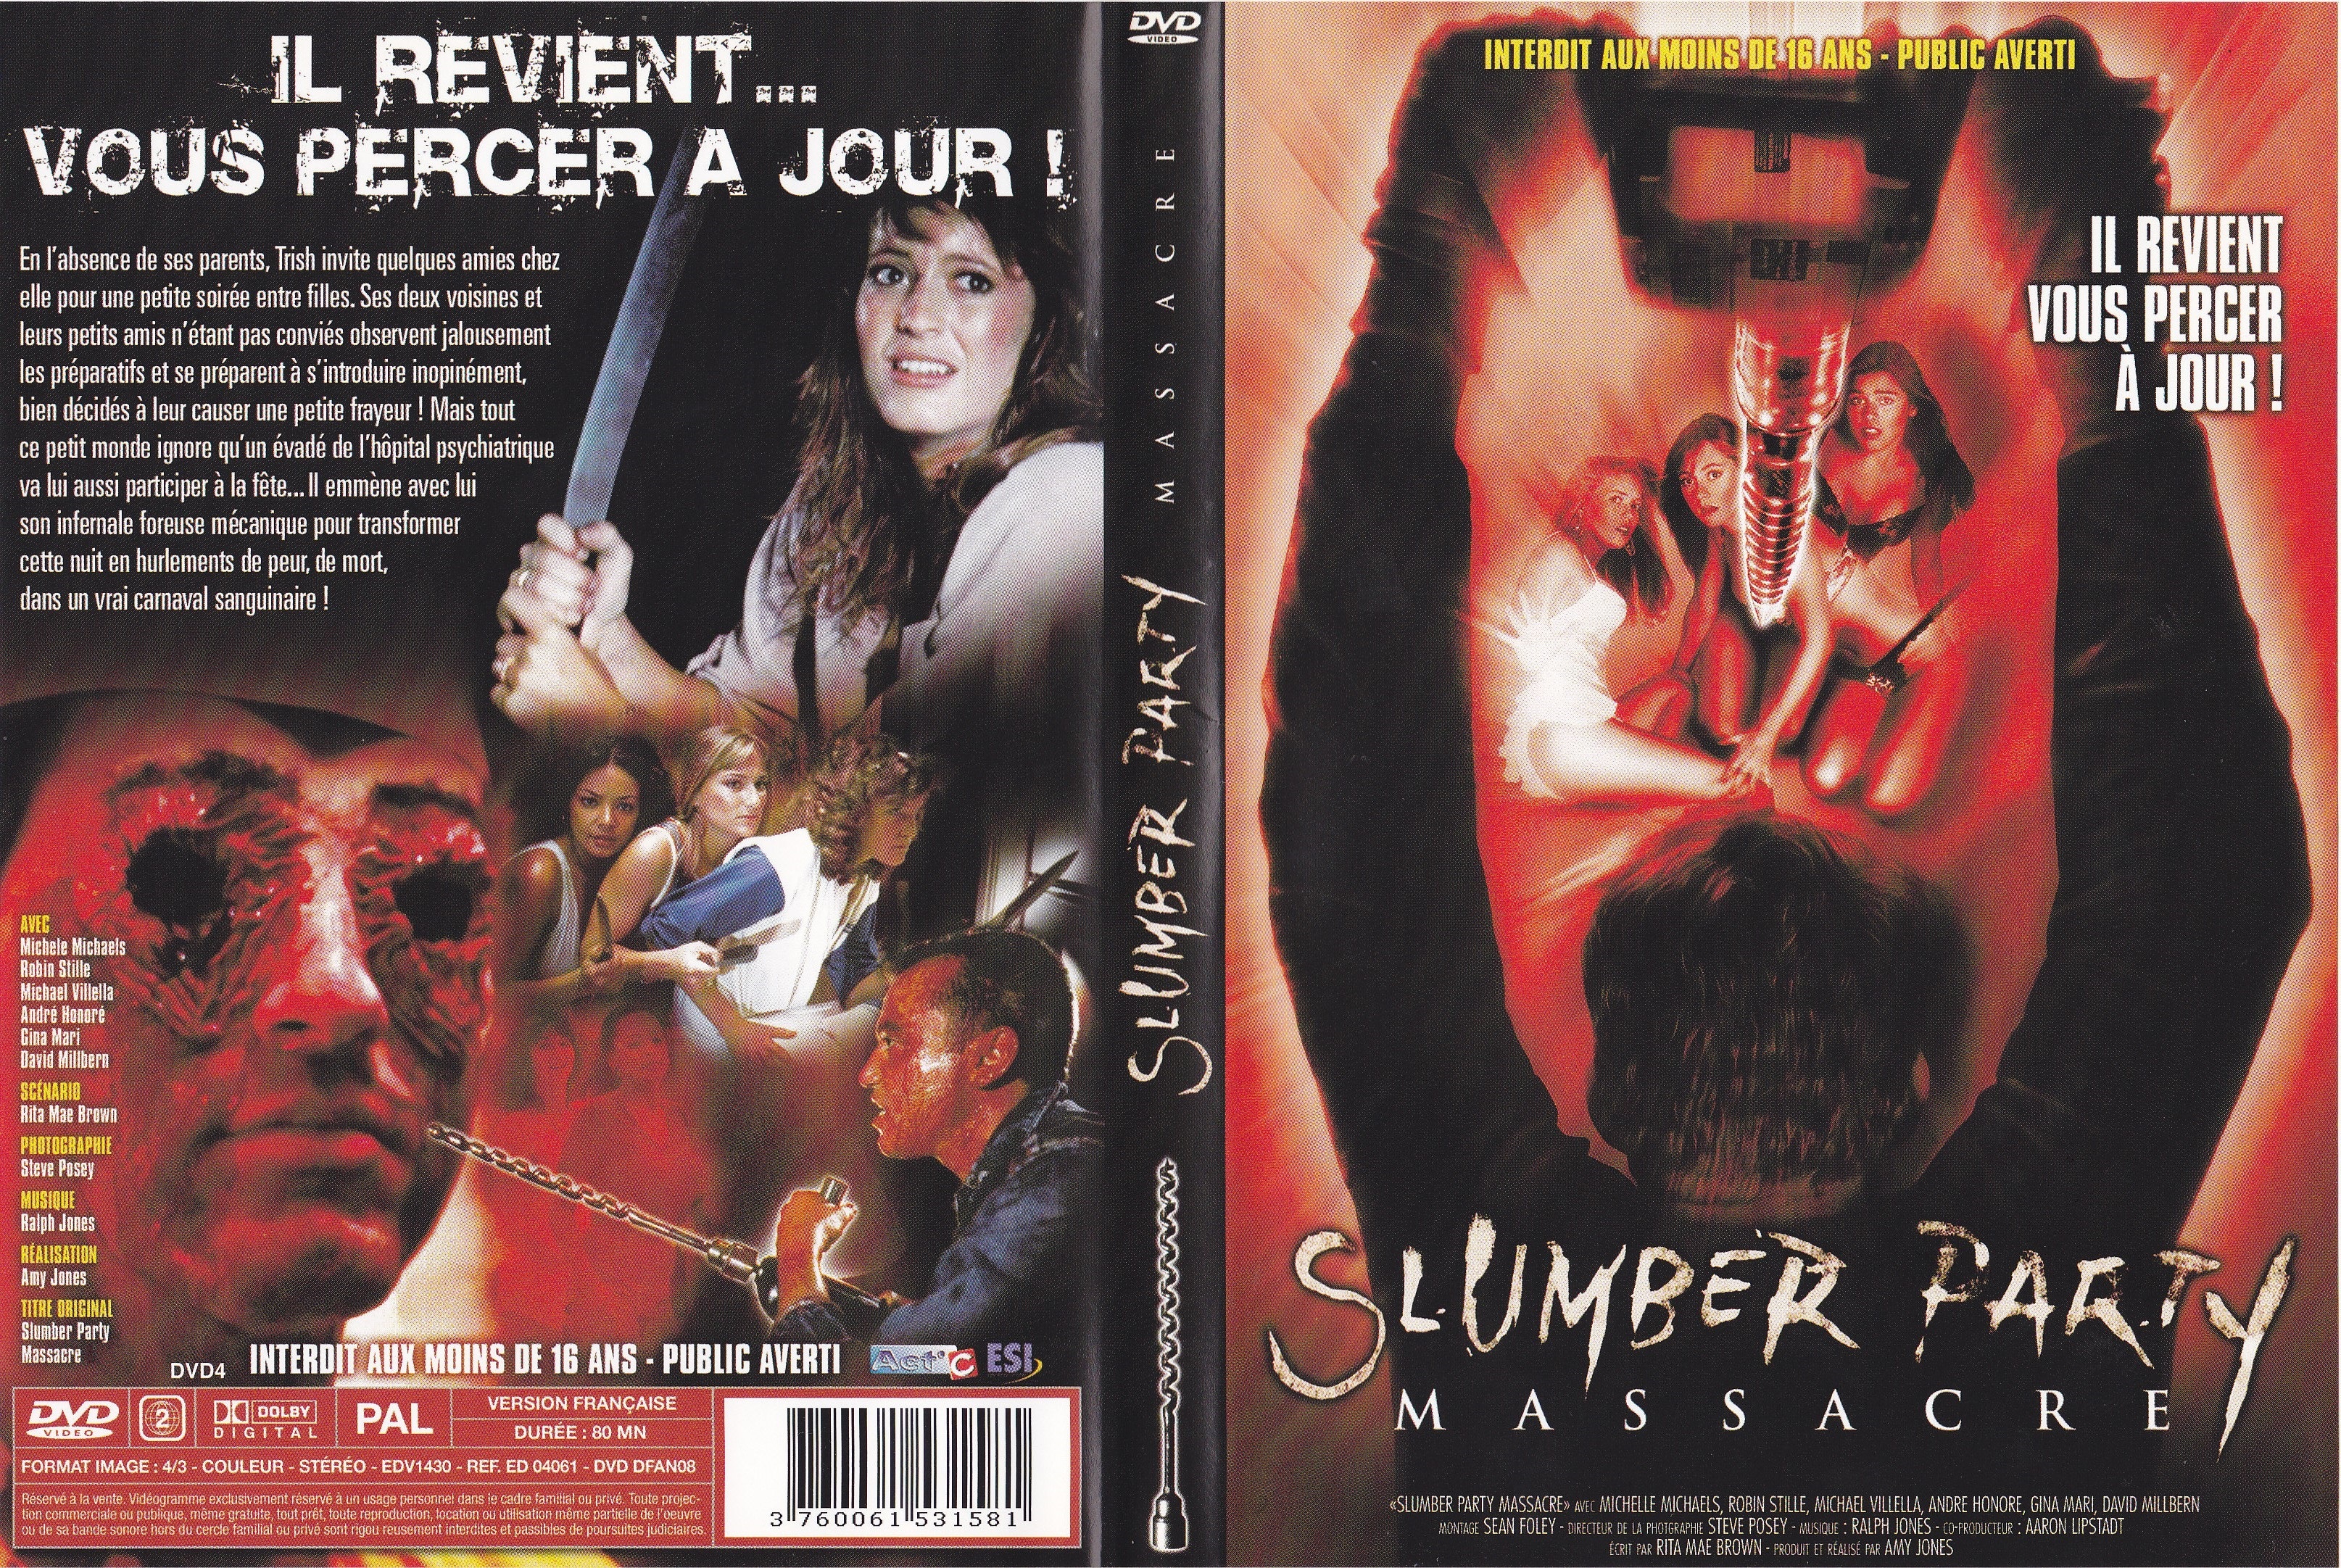 Jaquette DVD Slumber Party Massacre v2